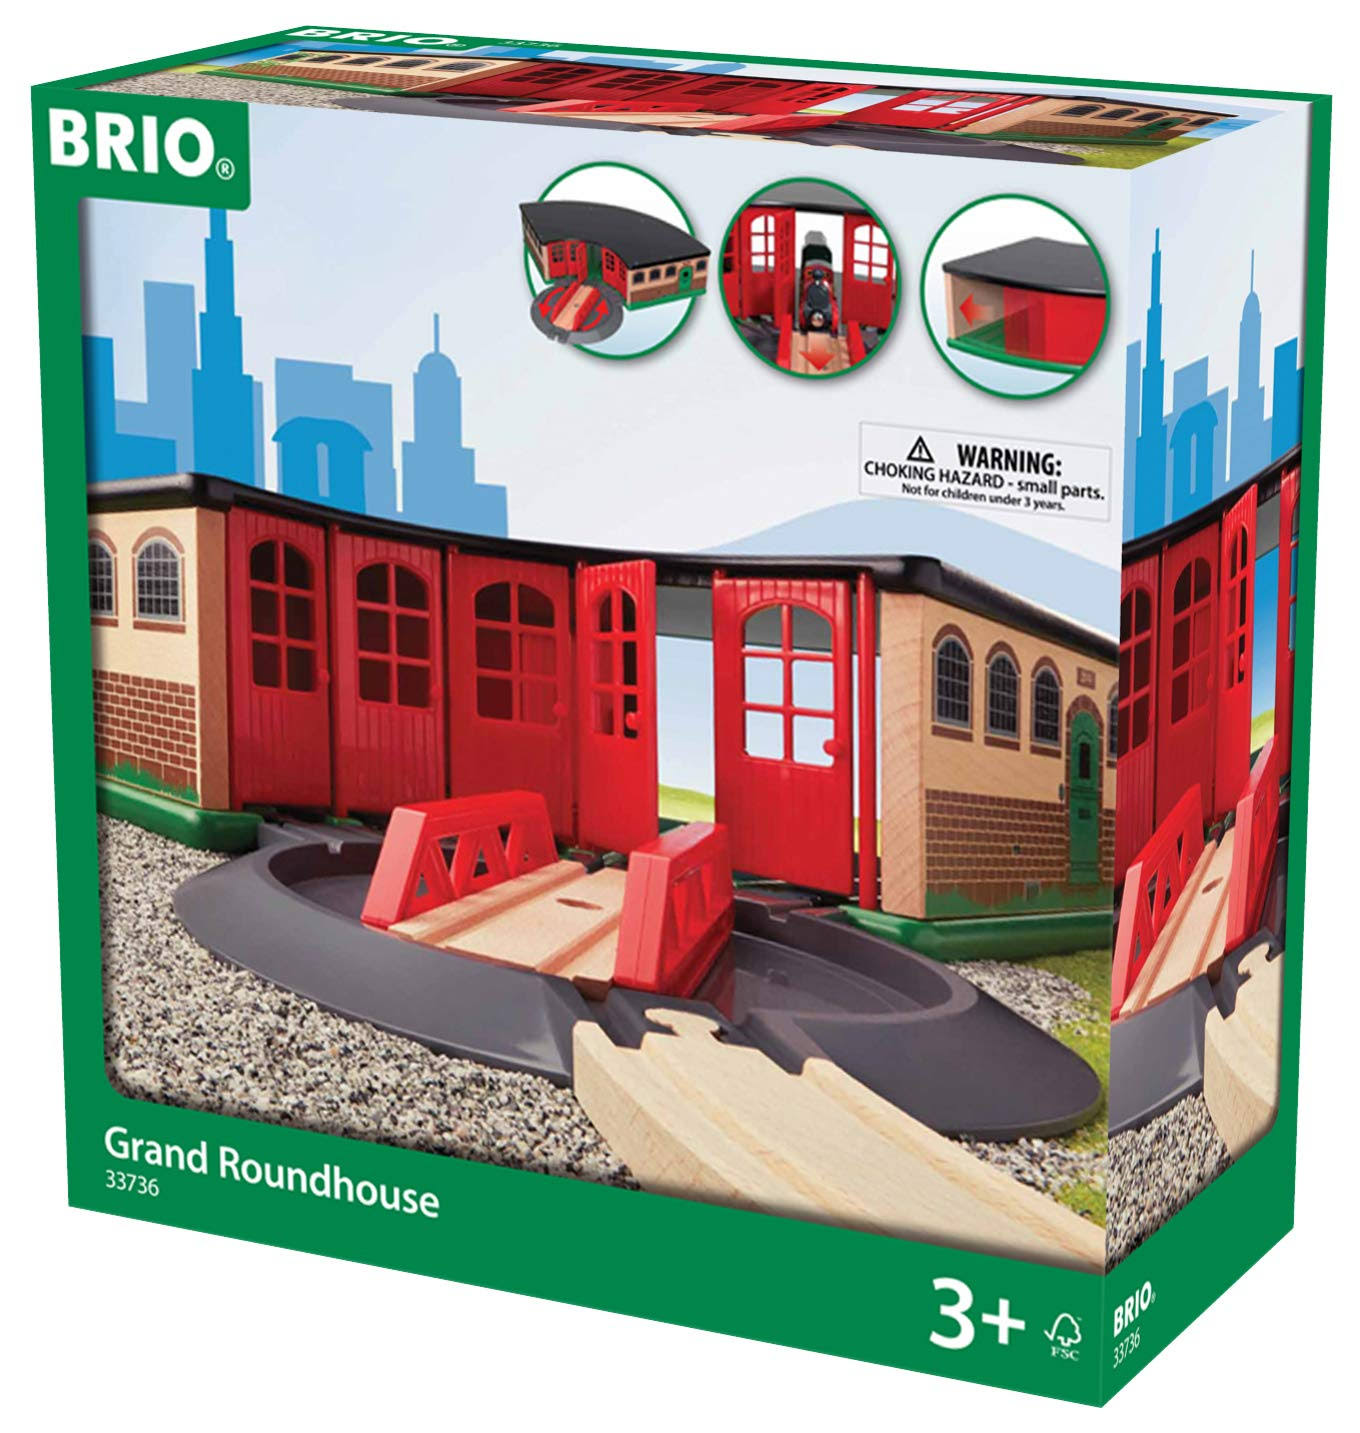 Brio 33736 Grand Roundhouse Wooden Train Toy Set